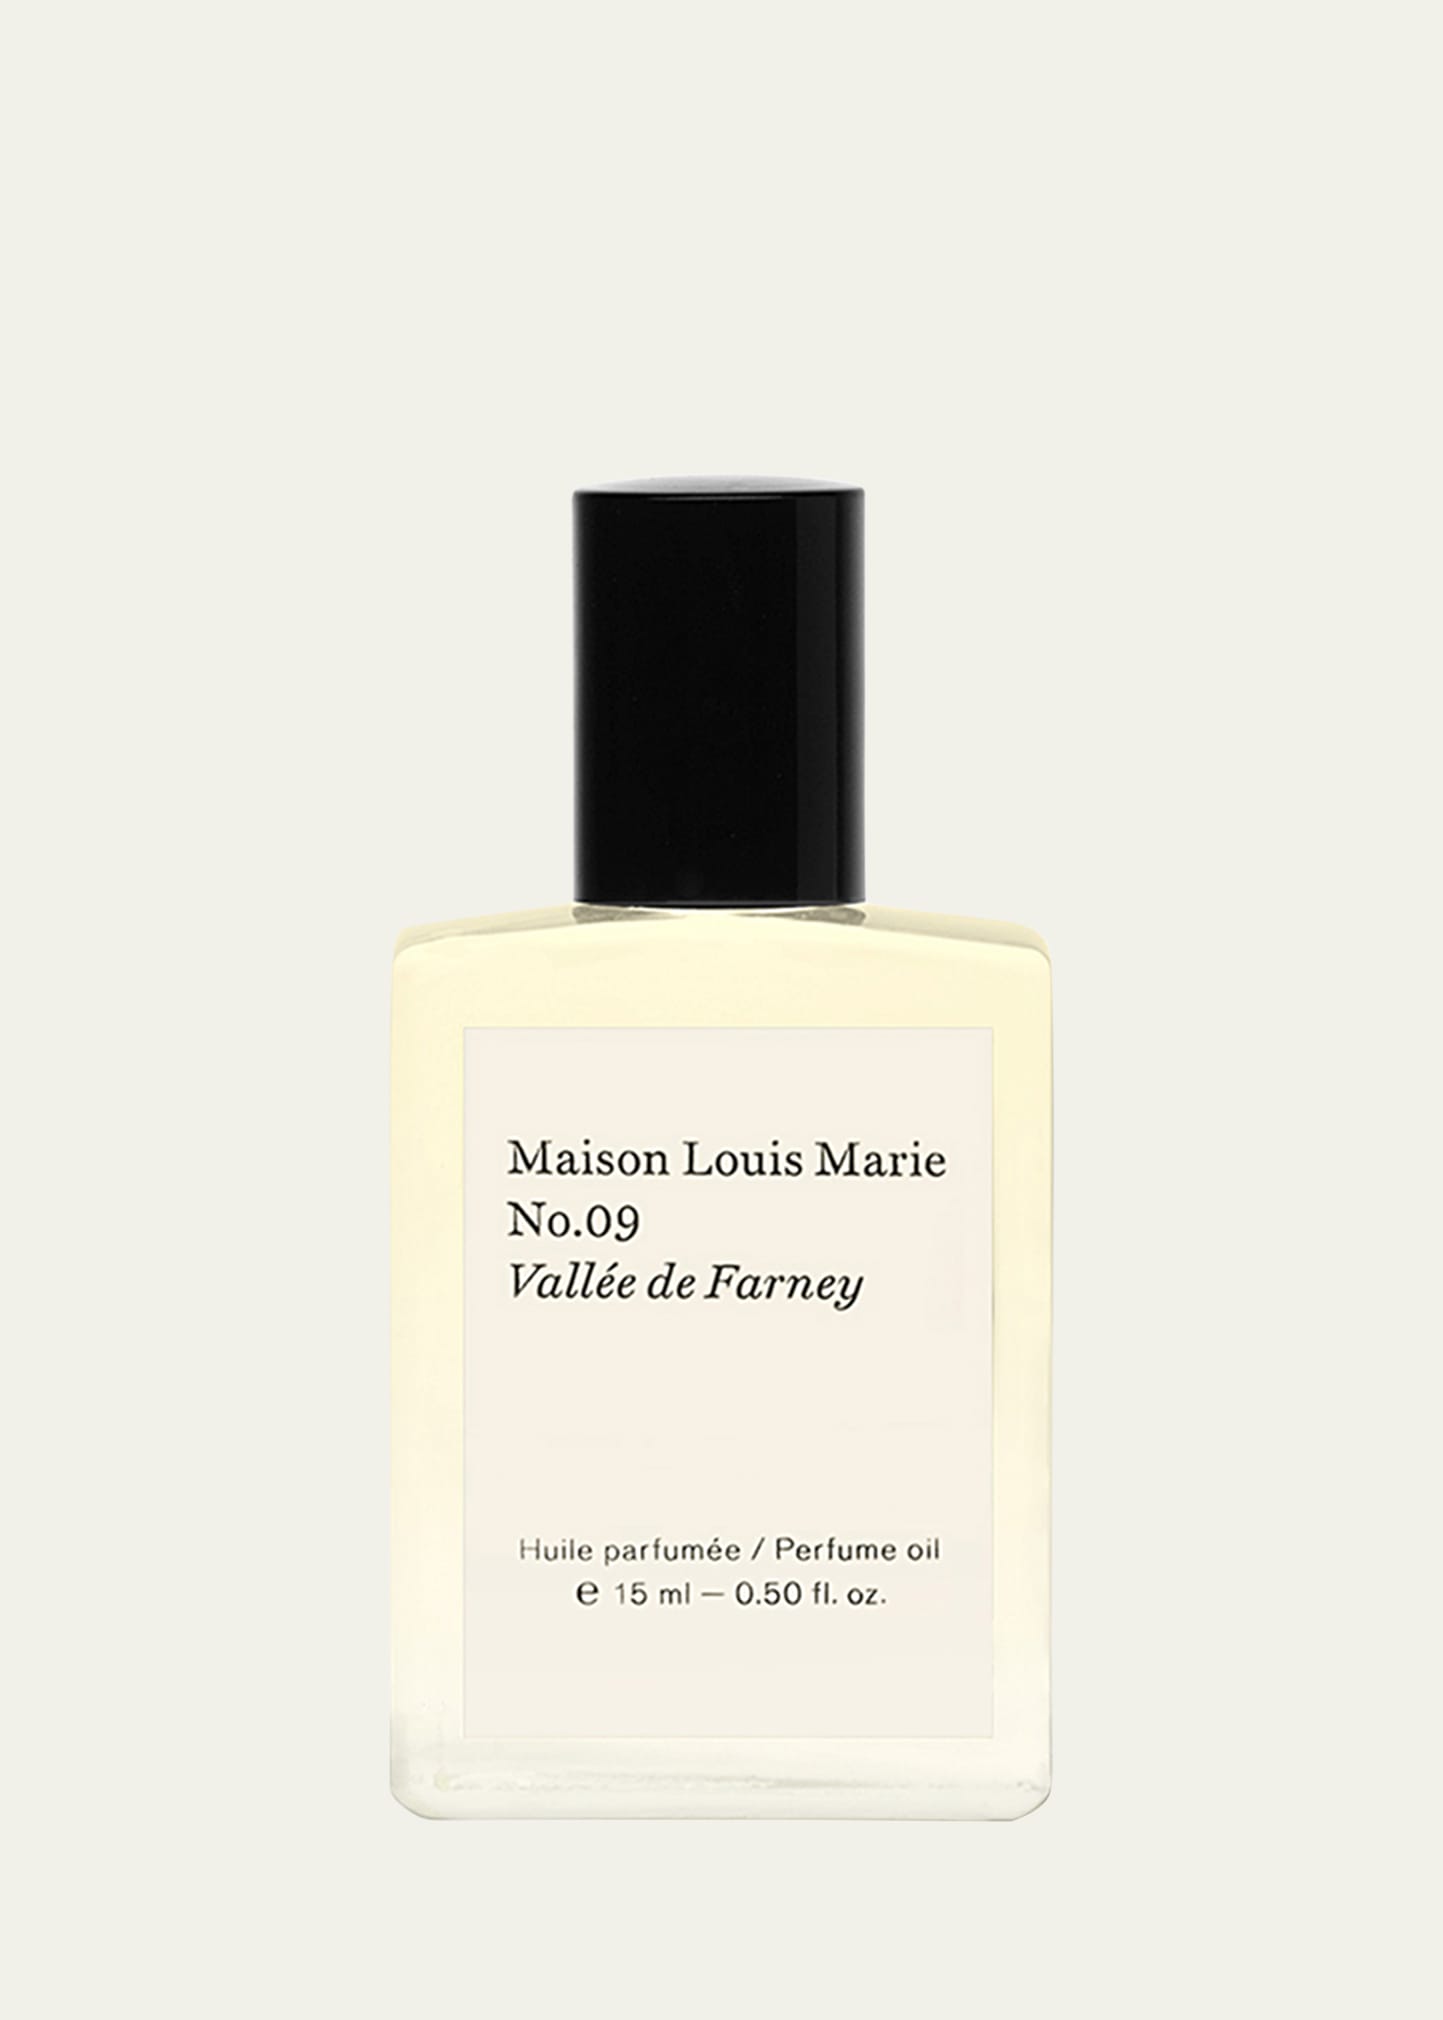 Maison Louis Marie 0.5 oz. No.09 Vallee de Farn Perfume Oil